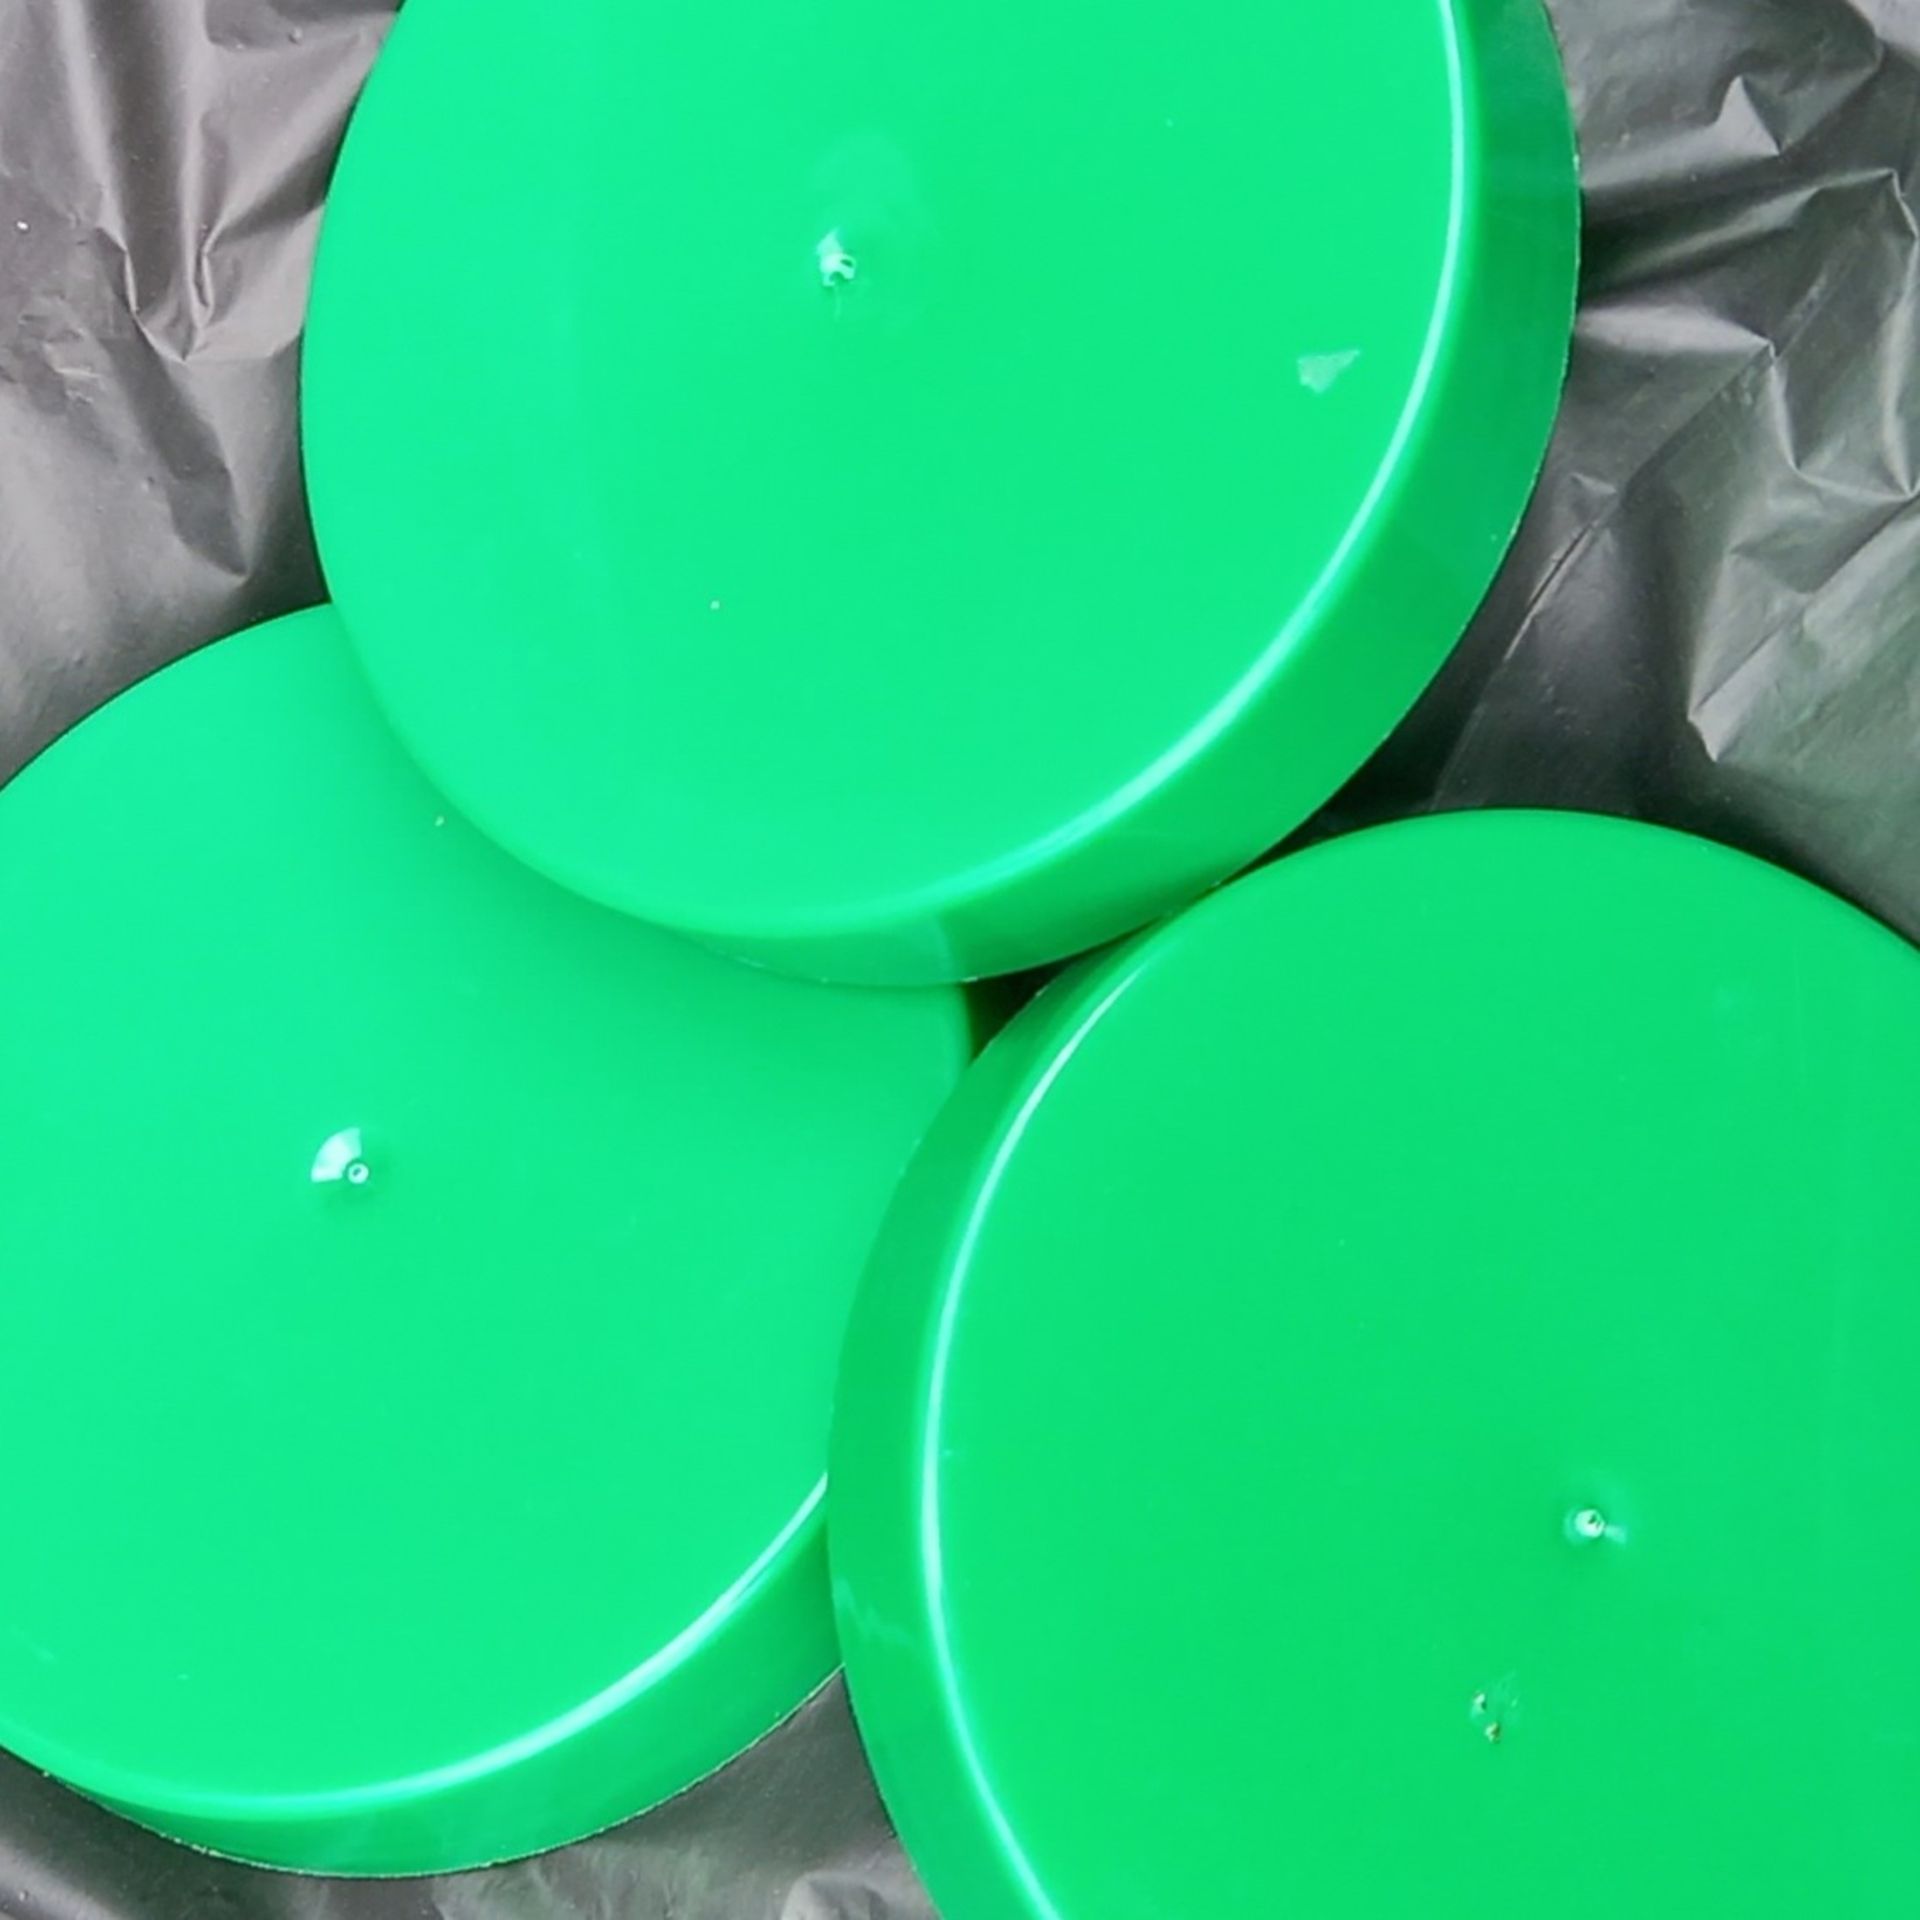 Green lids